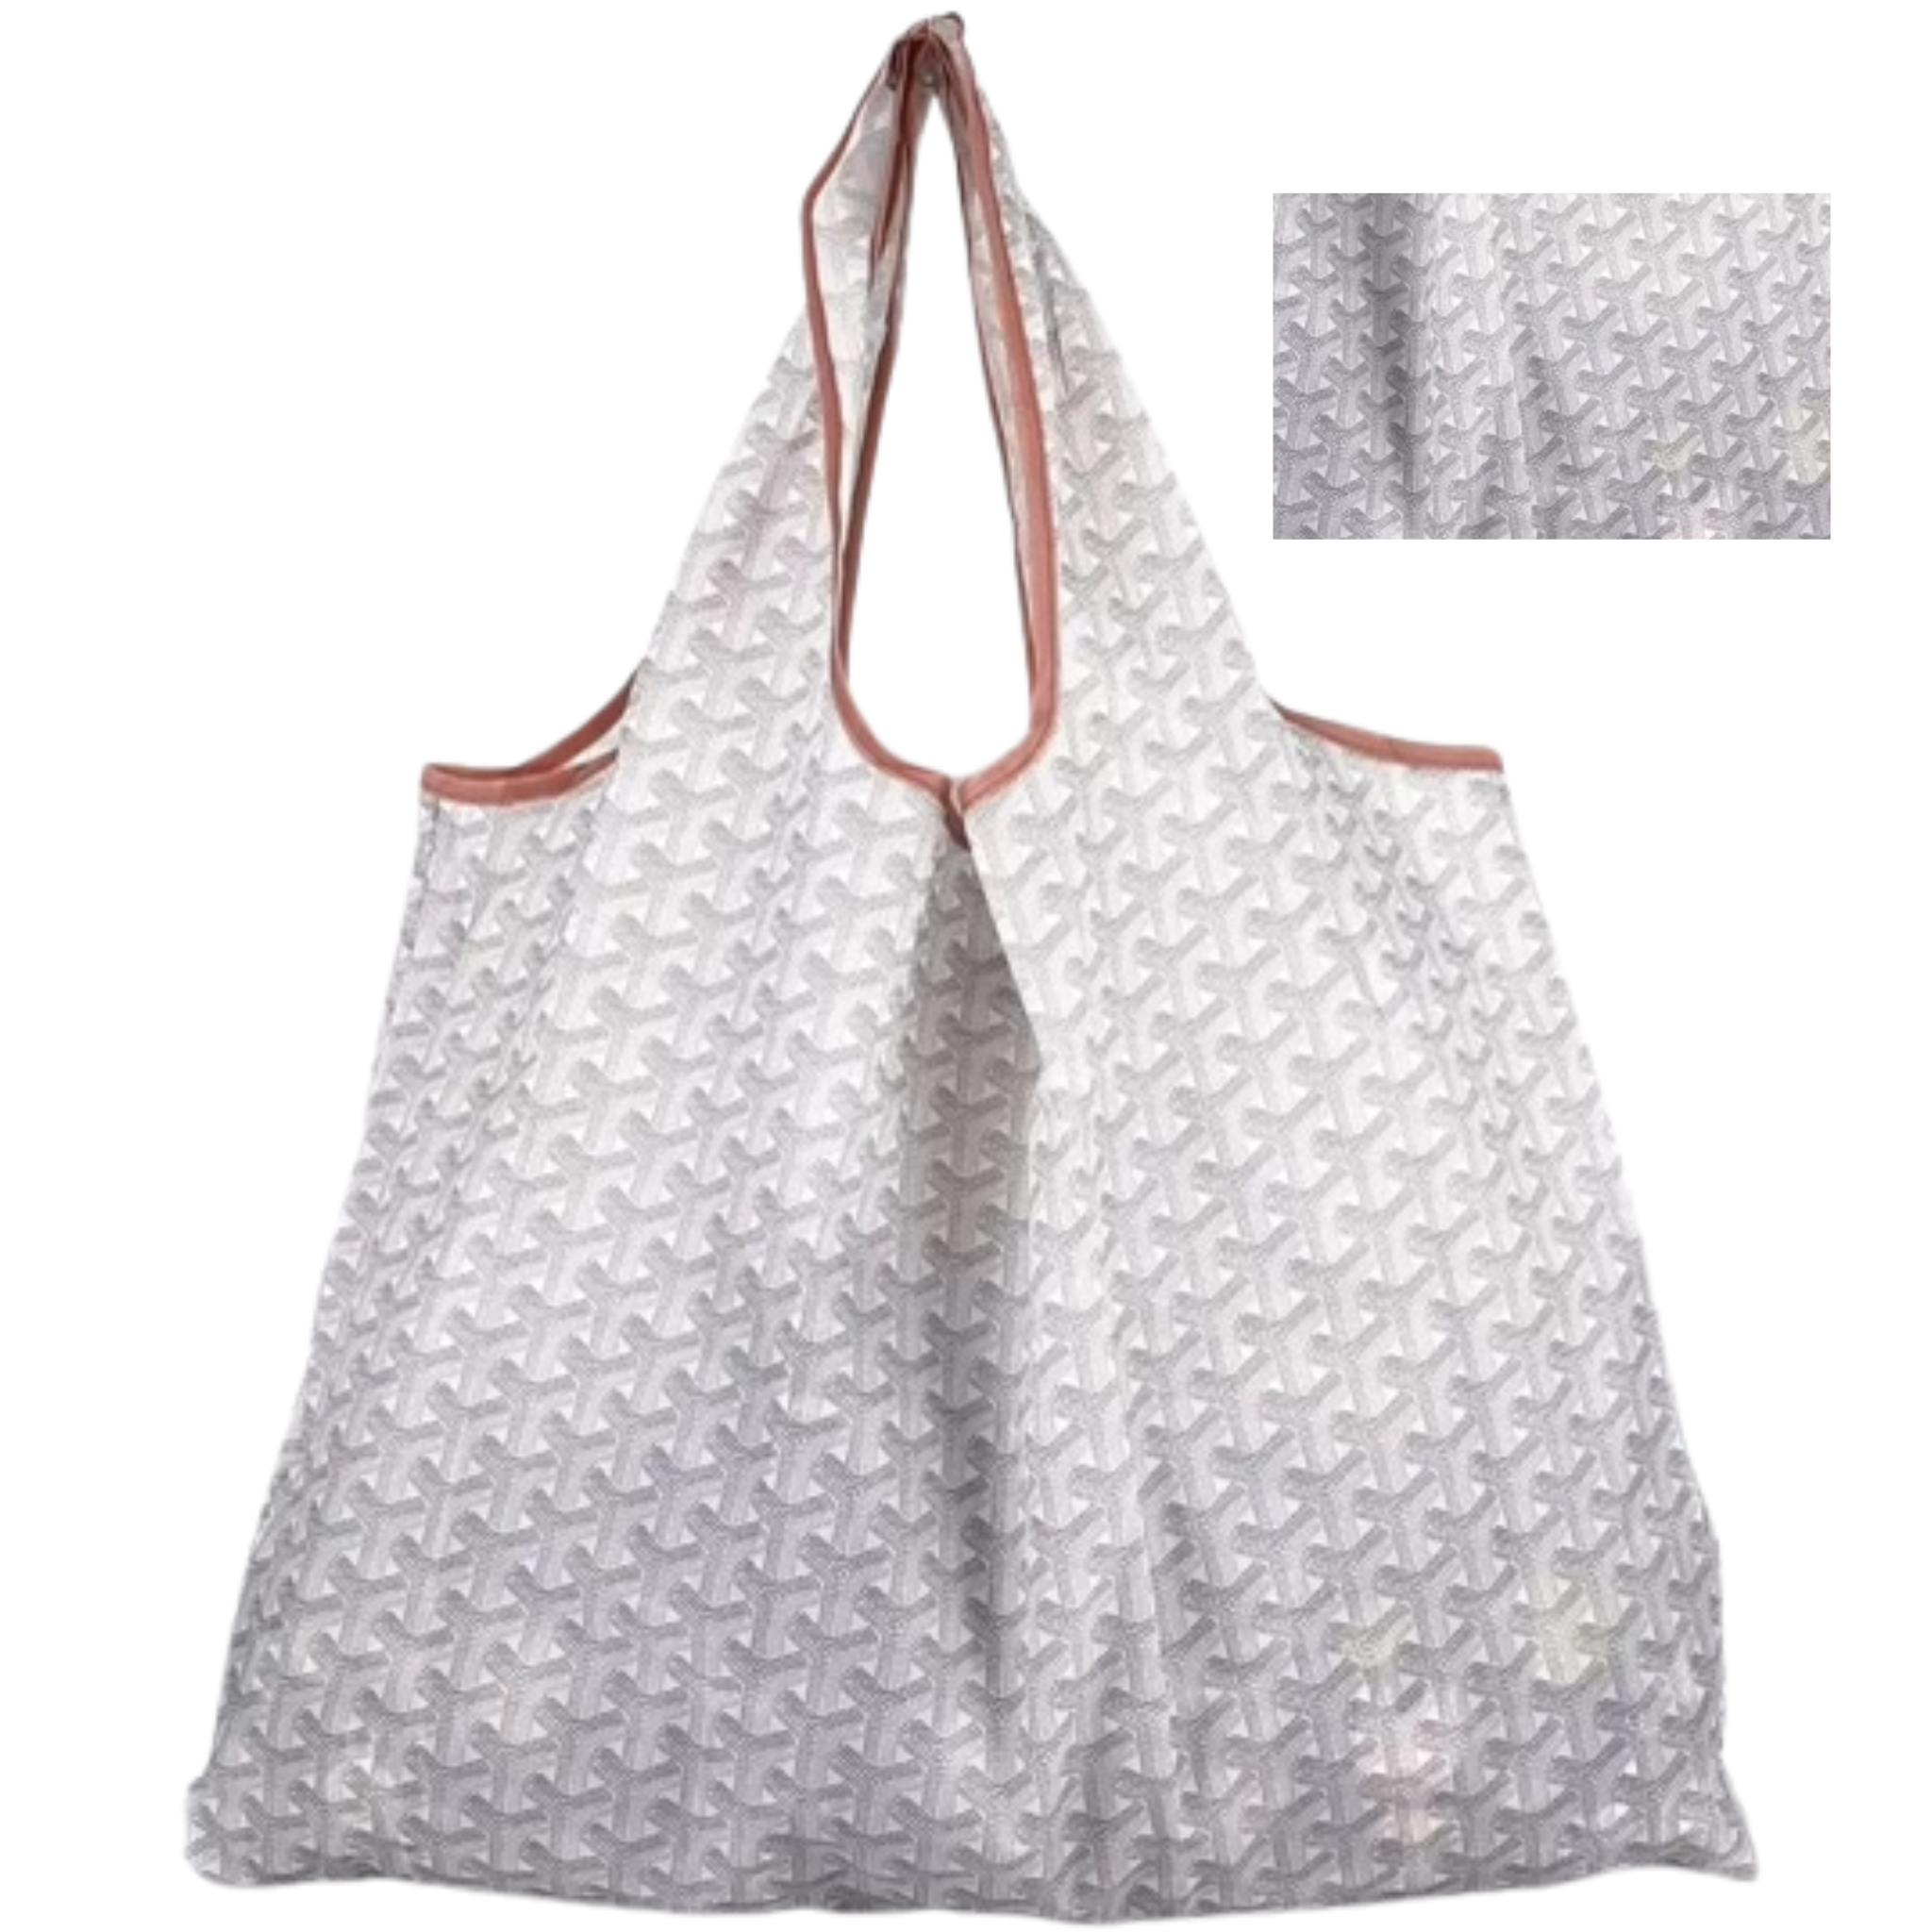 Big Eco Friendly Reusable Folding Shopping Bag / Beach Bag